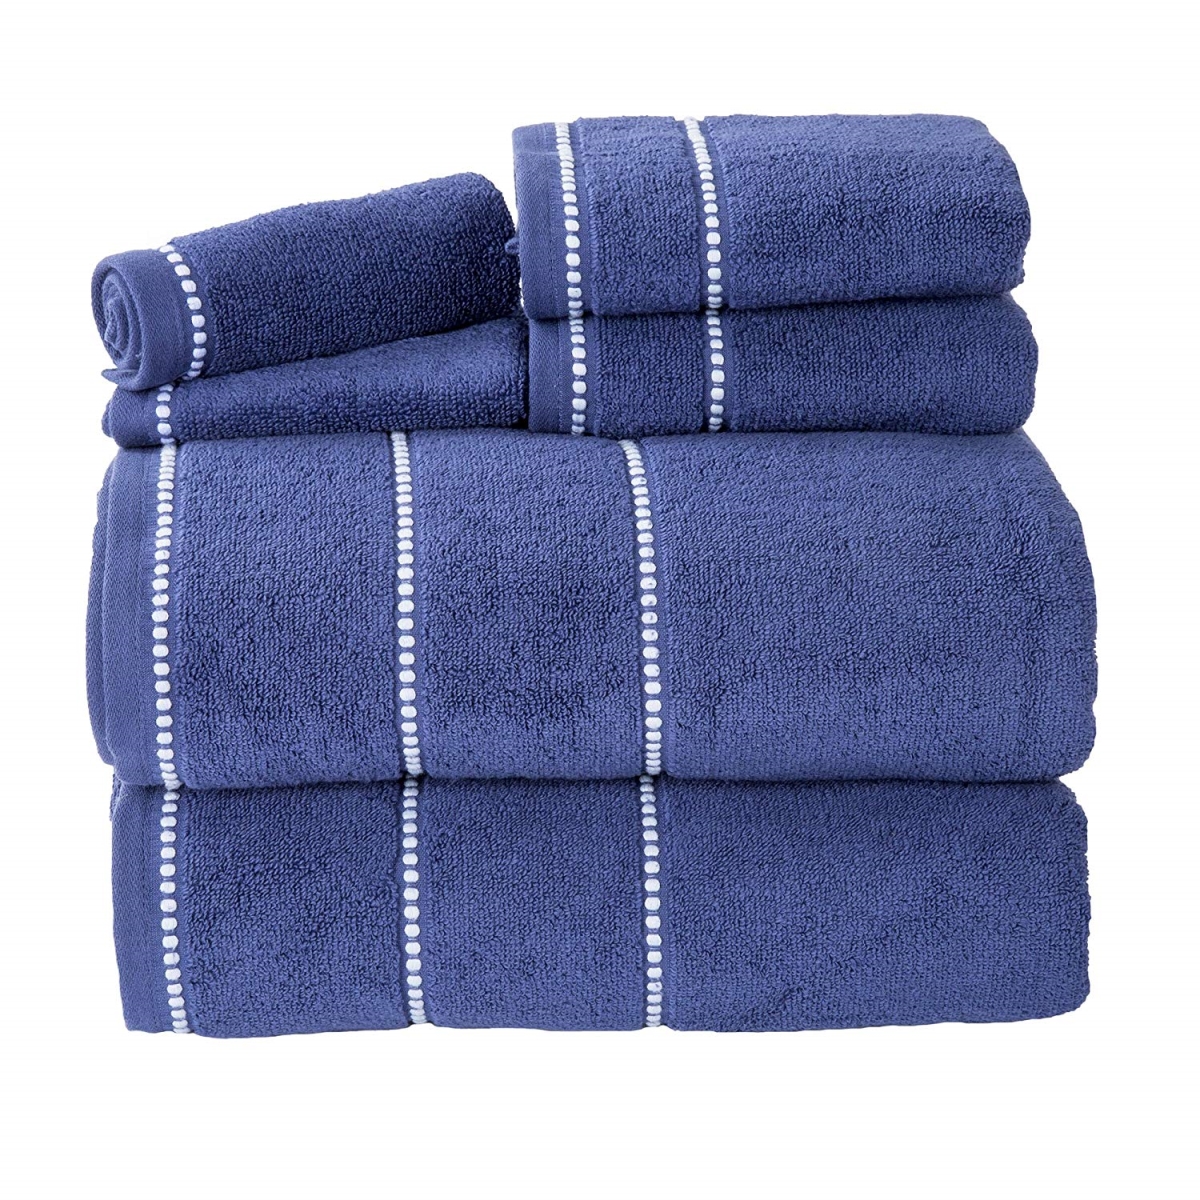 67a-76924 Quick Dry 100 Percent Cotton Zero Twist 6 Piece Towel Set - Navy